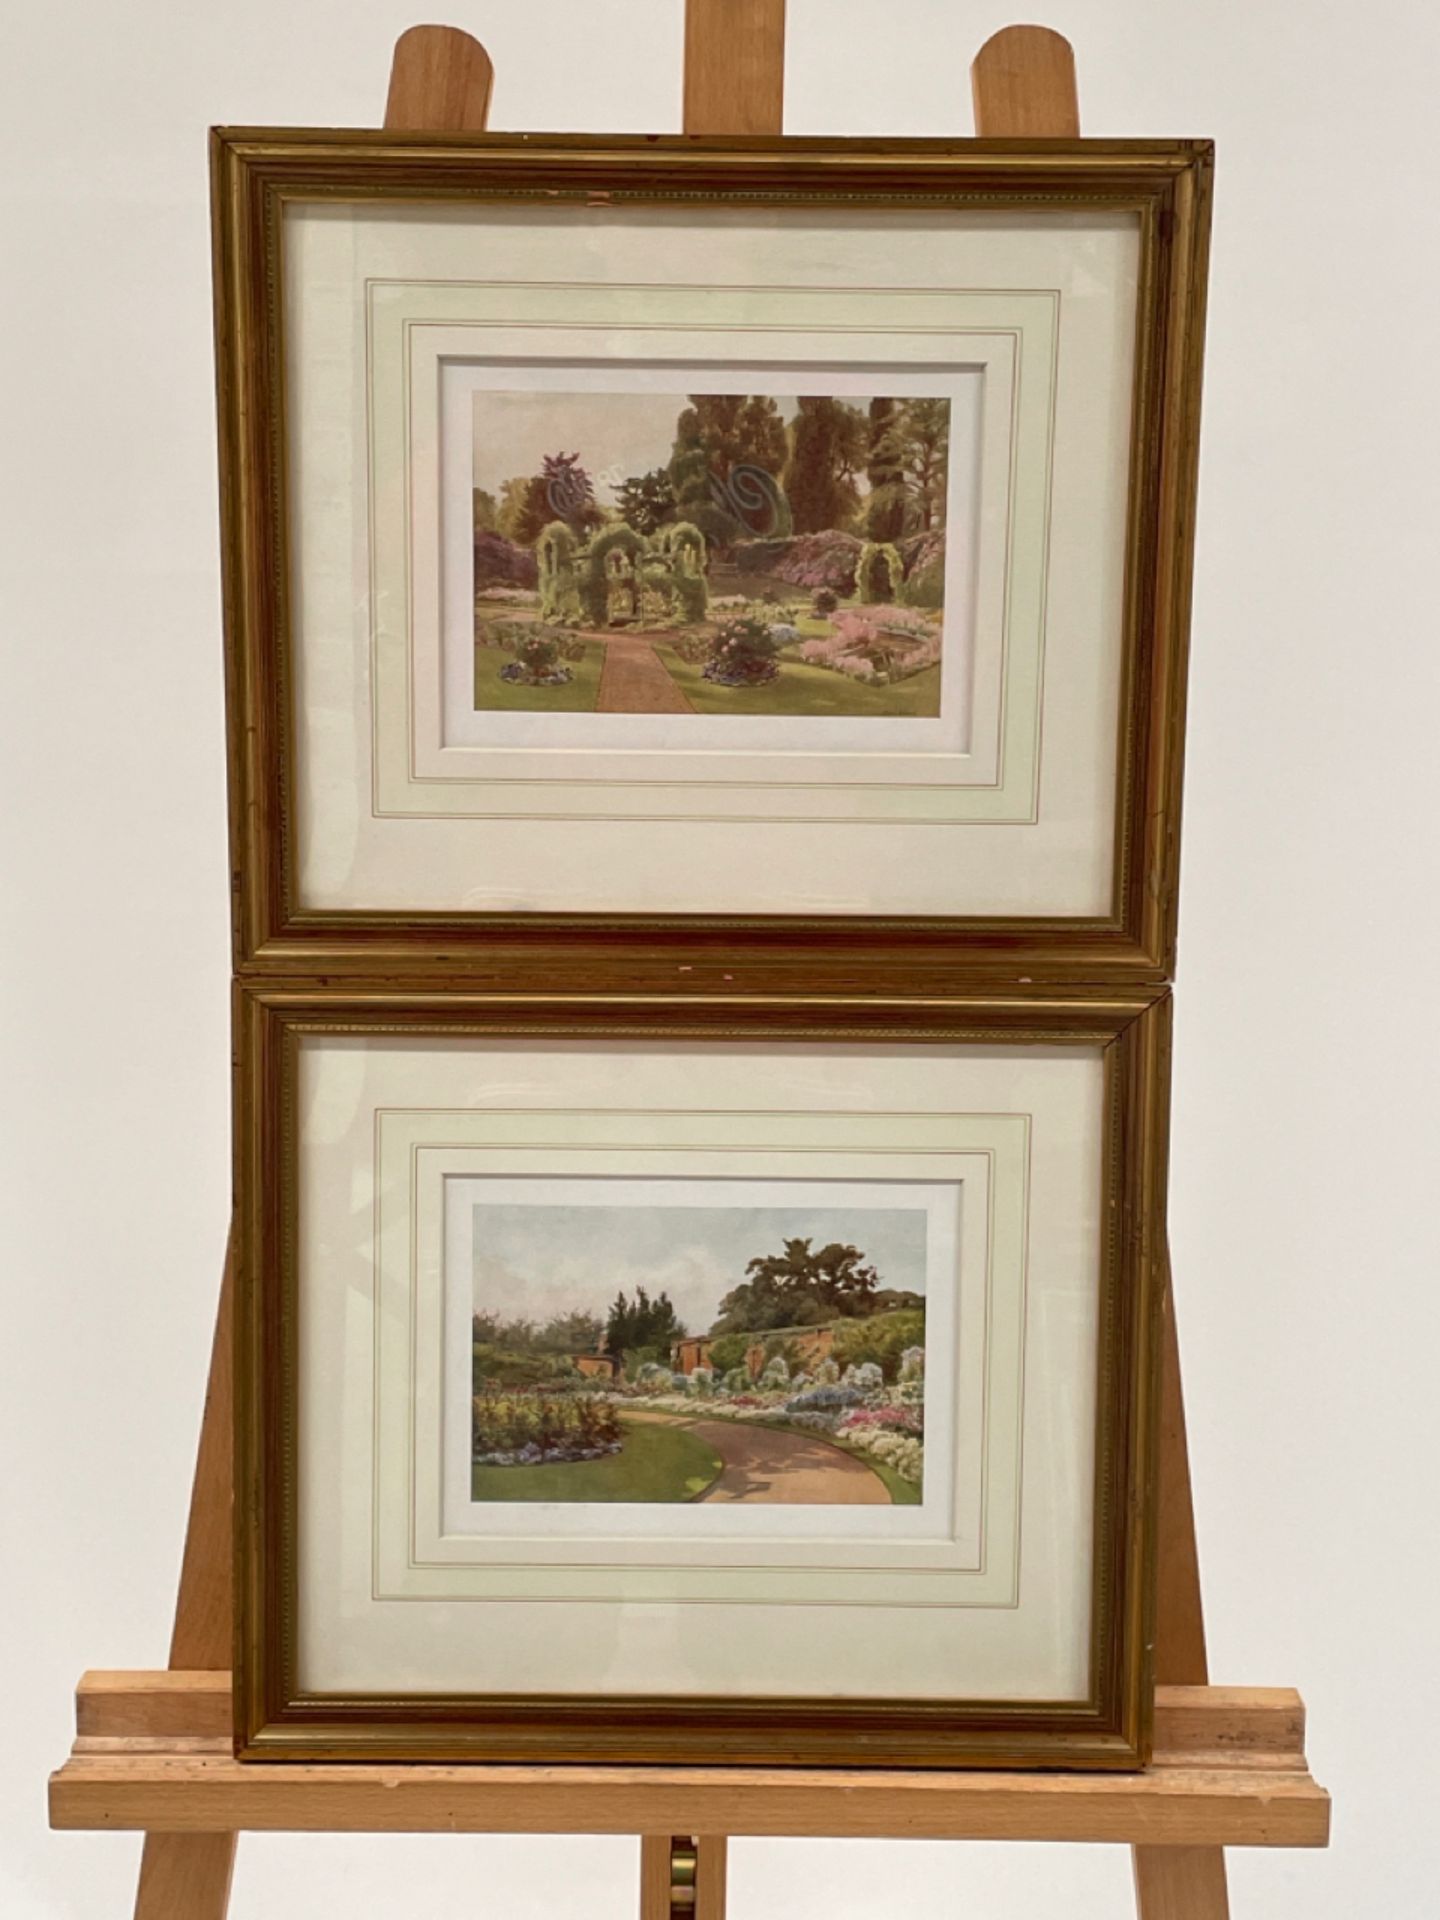 Garden Artwork Prints x2 From Claridge's Hotel